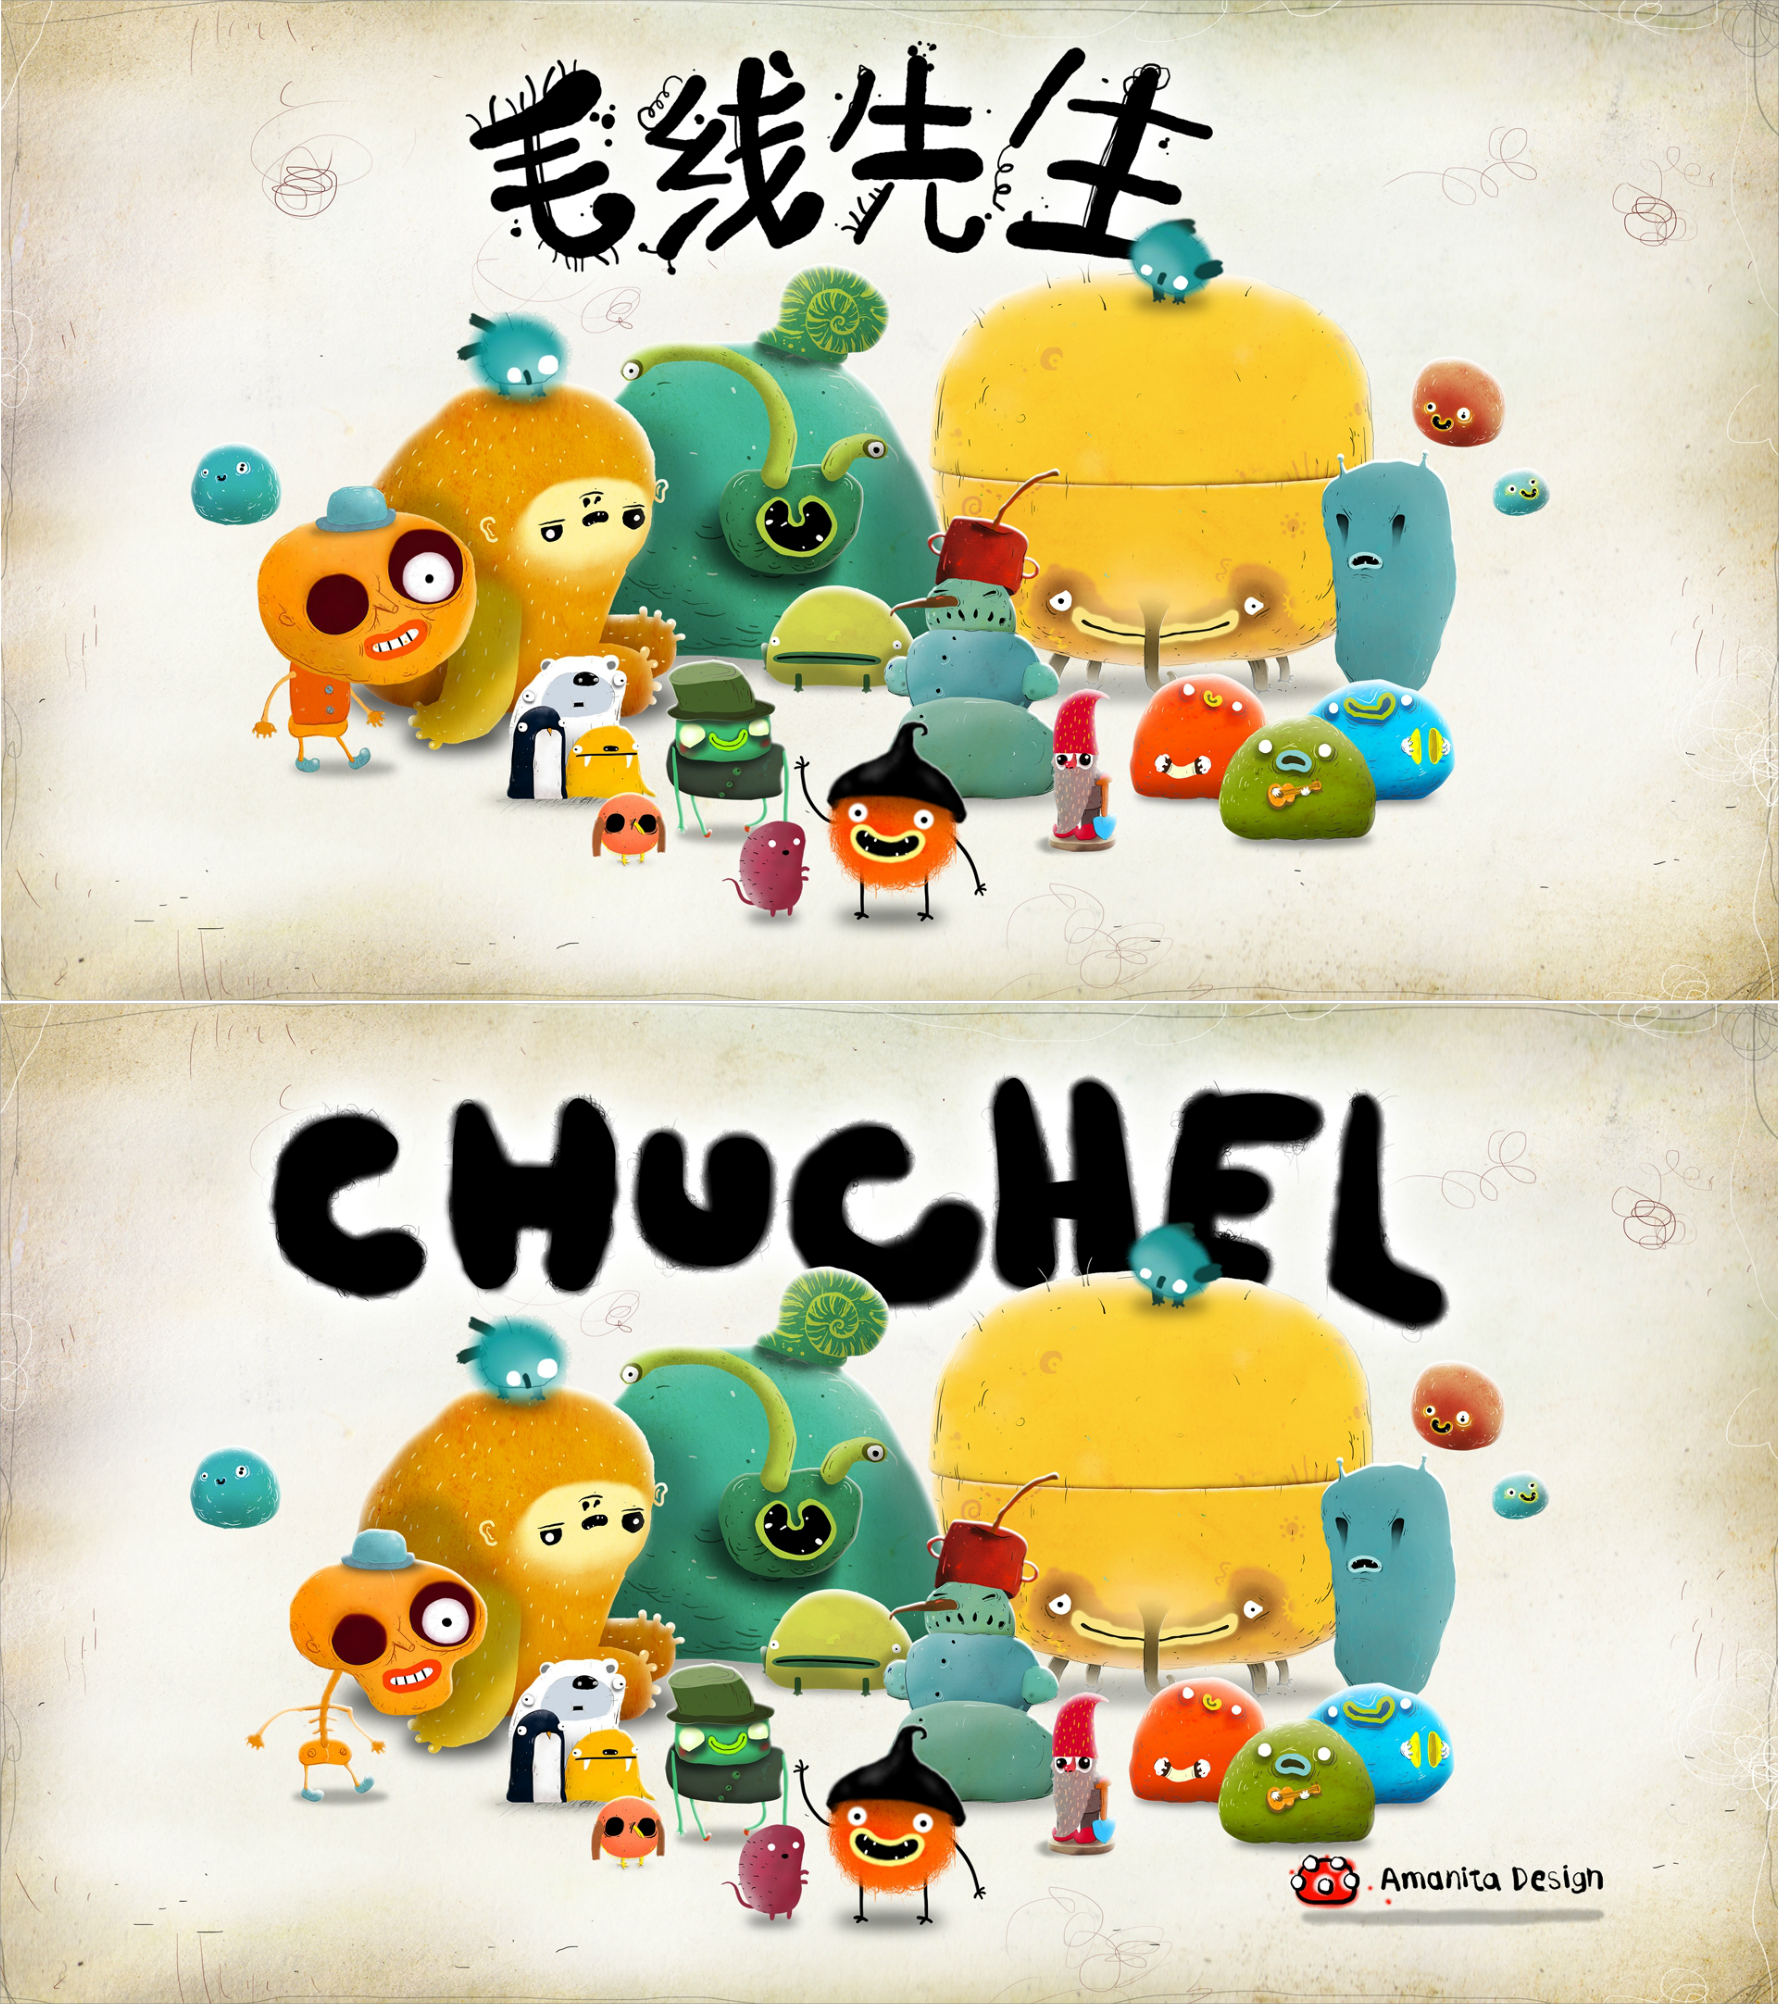 Chuchel - Ending